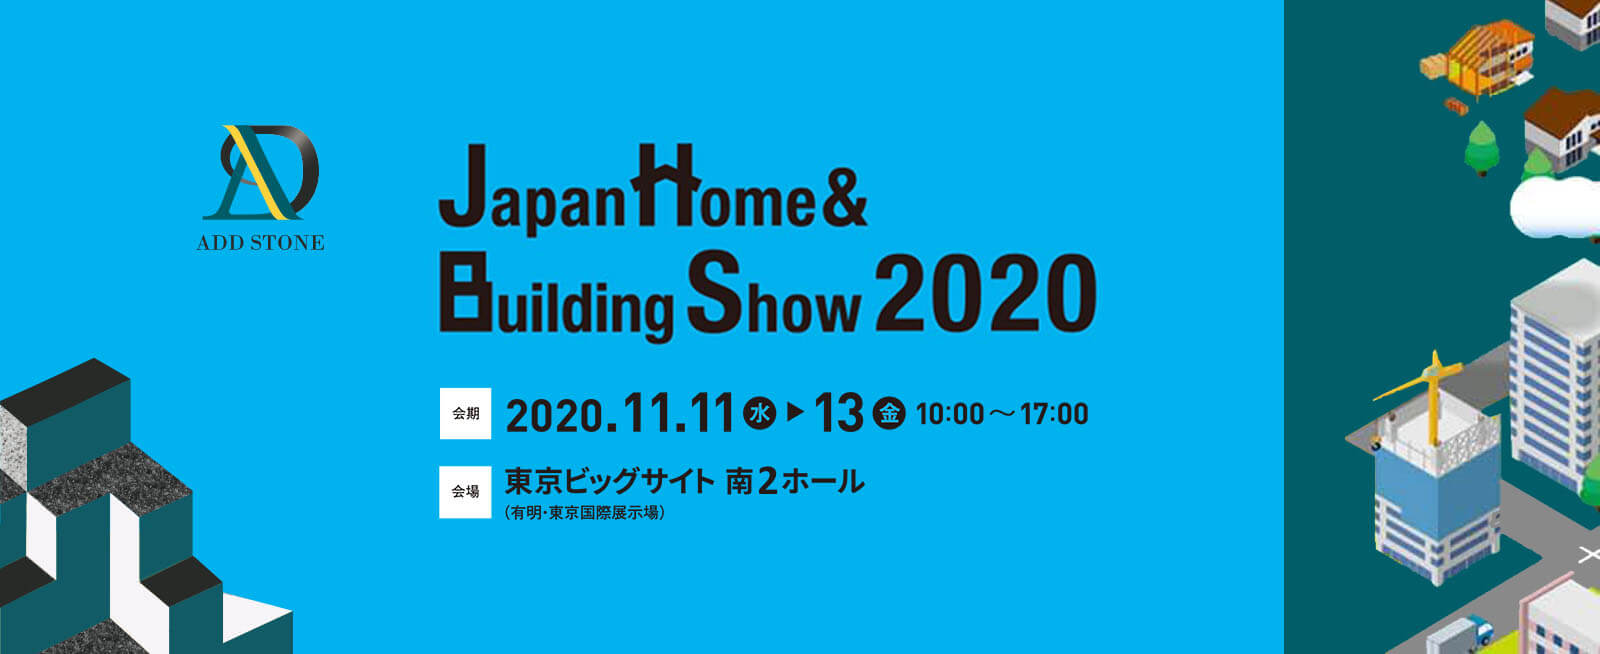 ADD STONEは2020/11/11東京ビッグサイトで開催されたJHBS展示会に参加します